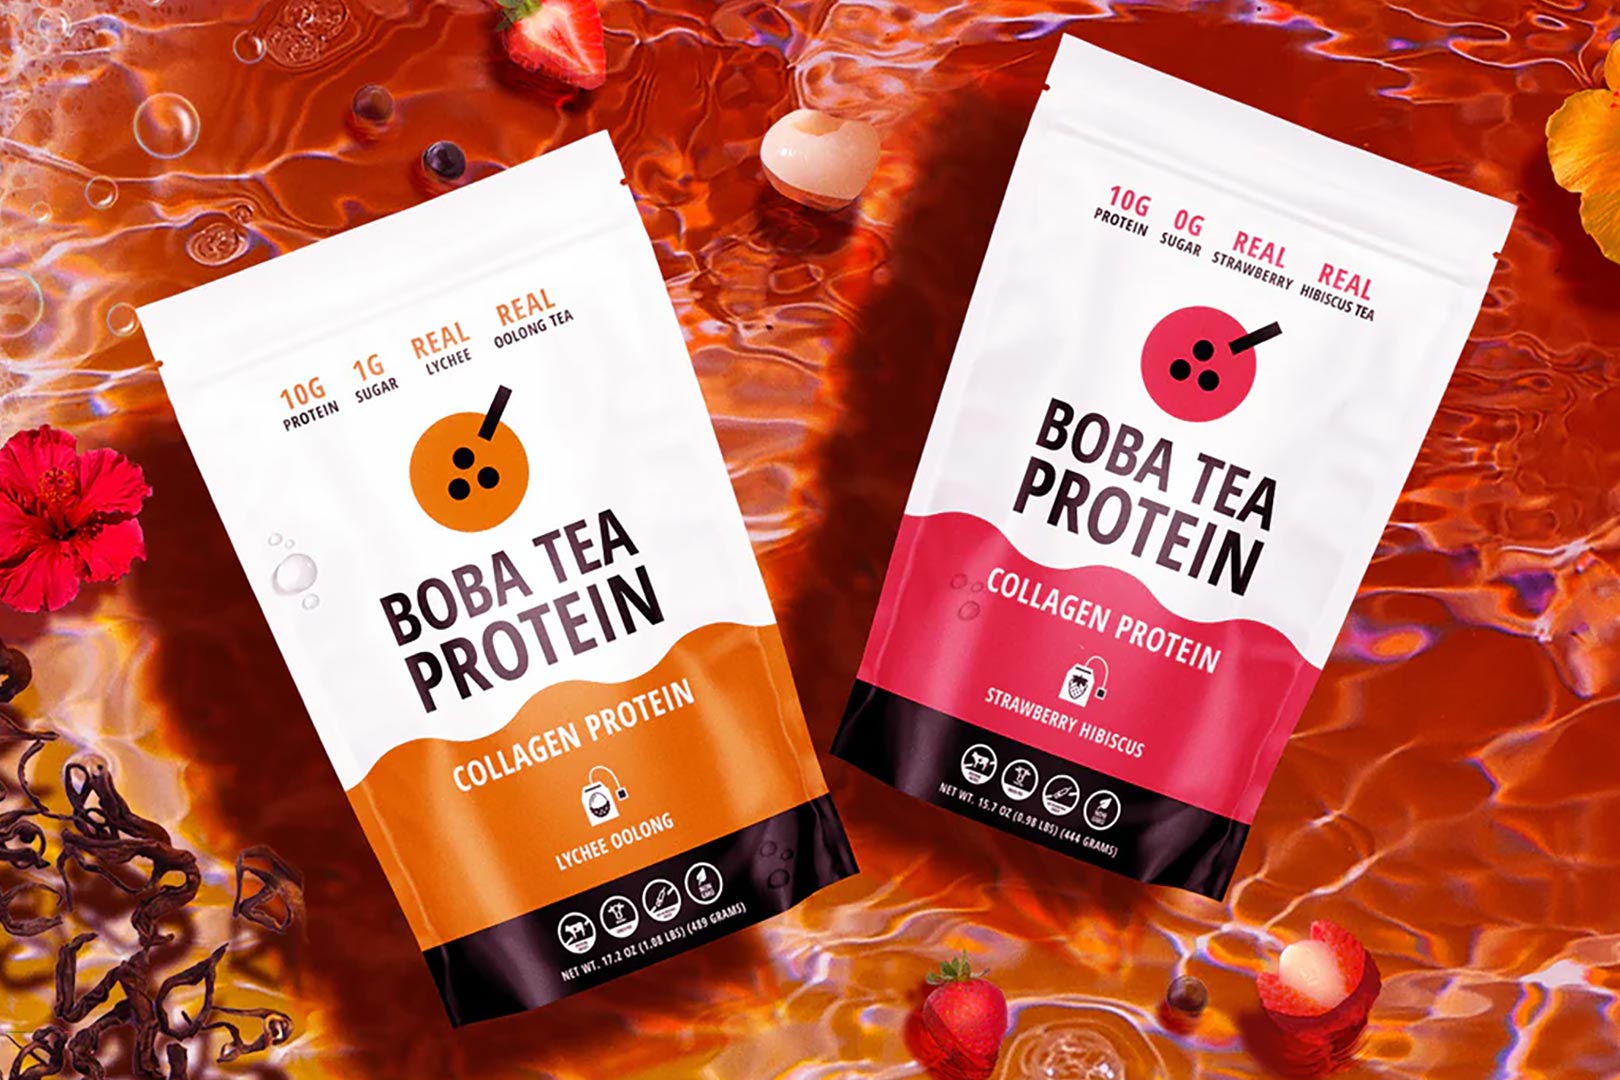 Boba Tea Protein Strawberry Hibiscus Collagen Protein